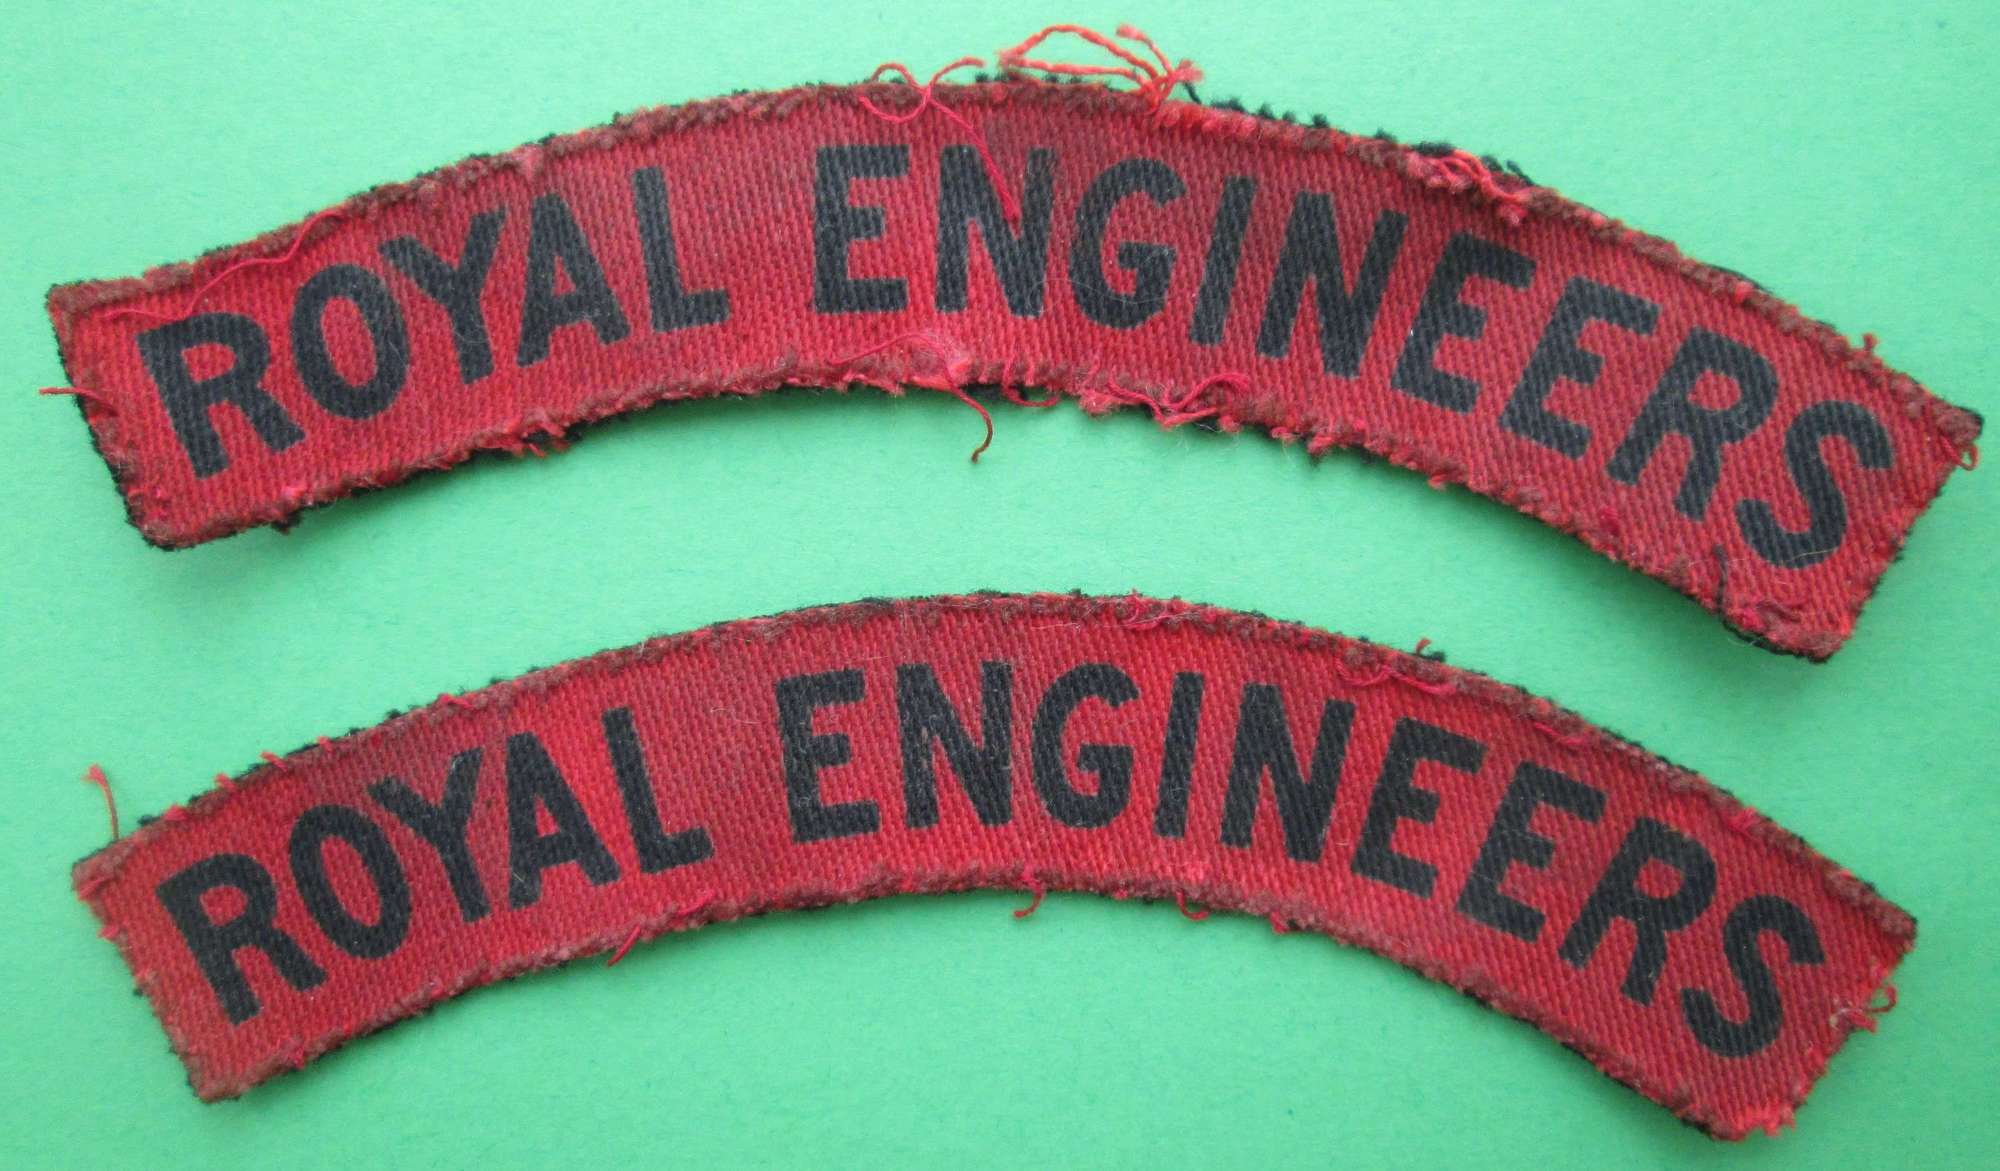 A PAIR OF ROYAL ENGINEERS SHOULDER TITLES